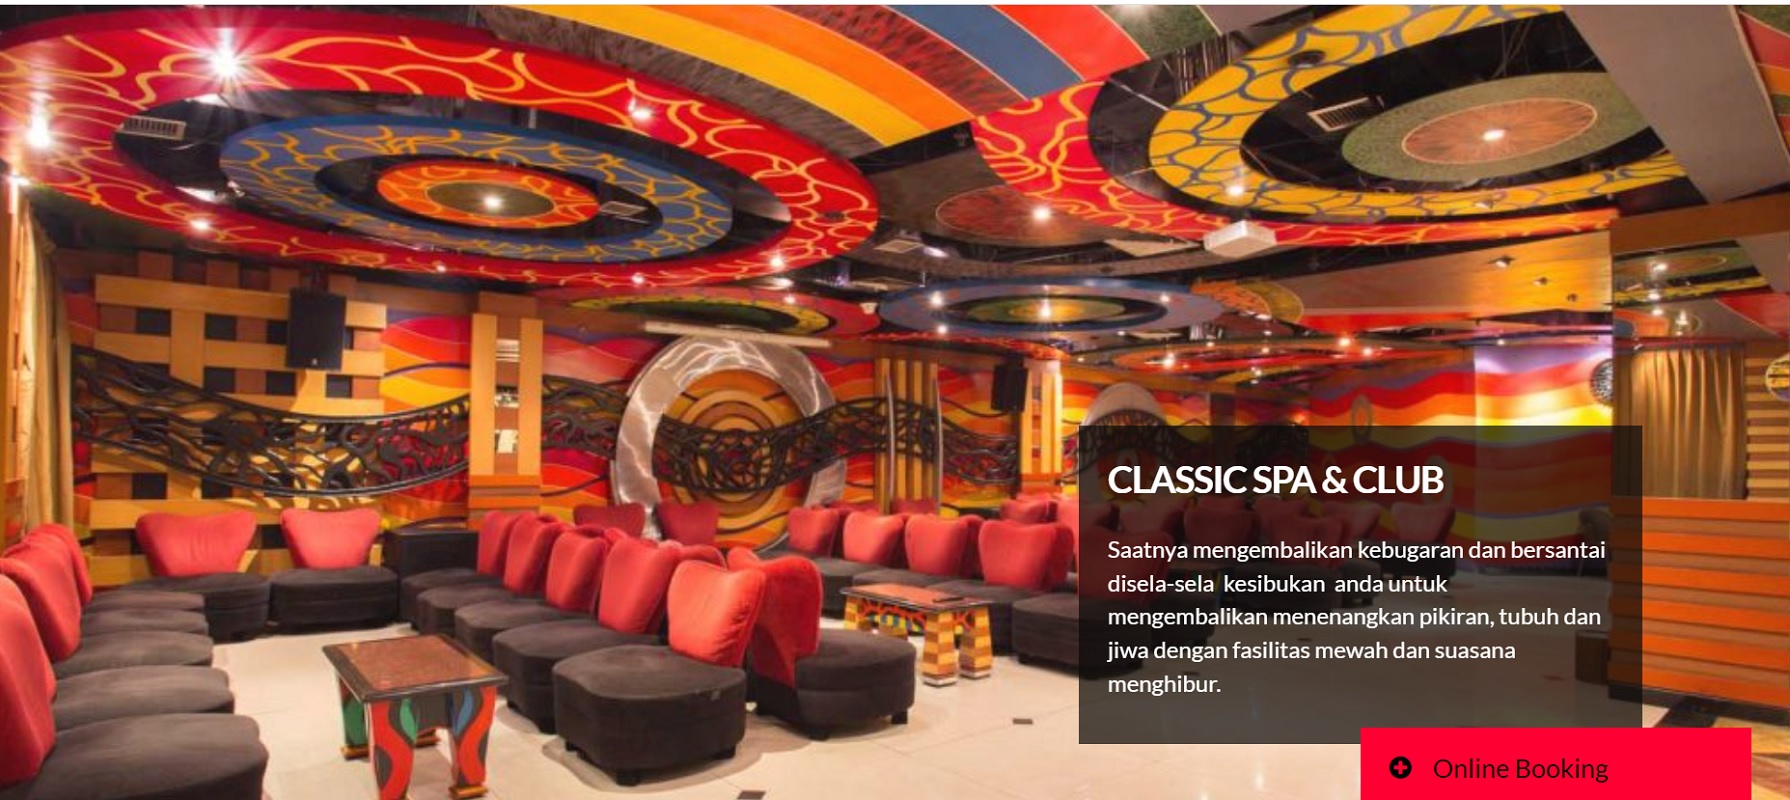 Spa Hotel Classic, di Sinilah Mami Linda - Teddy Minahasa Berkenalan, Lokasinya Gak Jauh dari Istana Presiden 